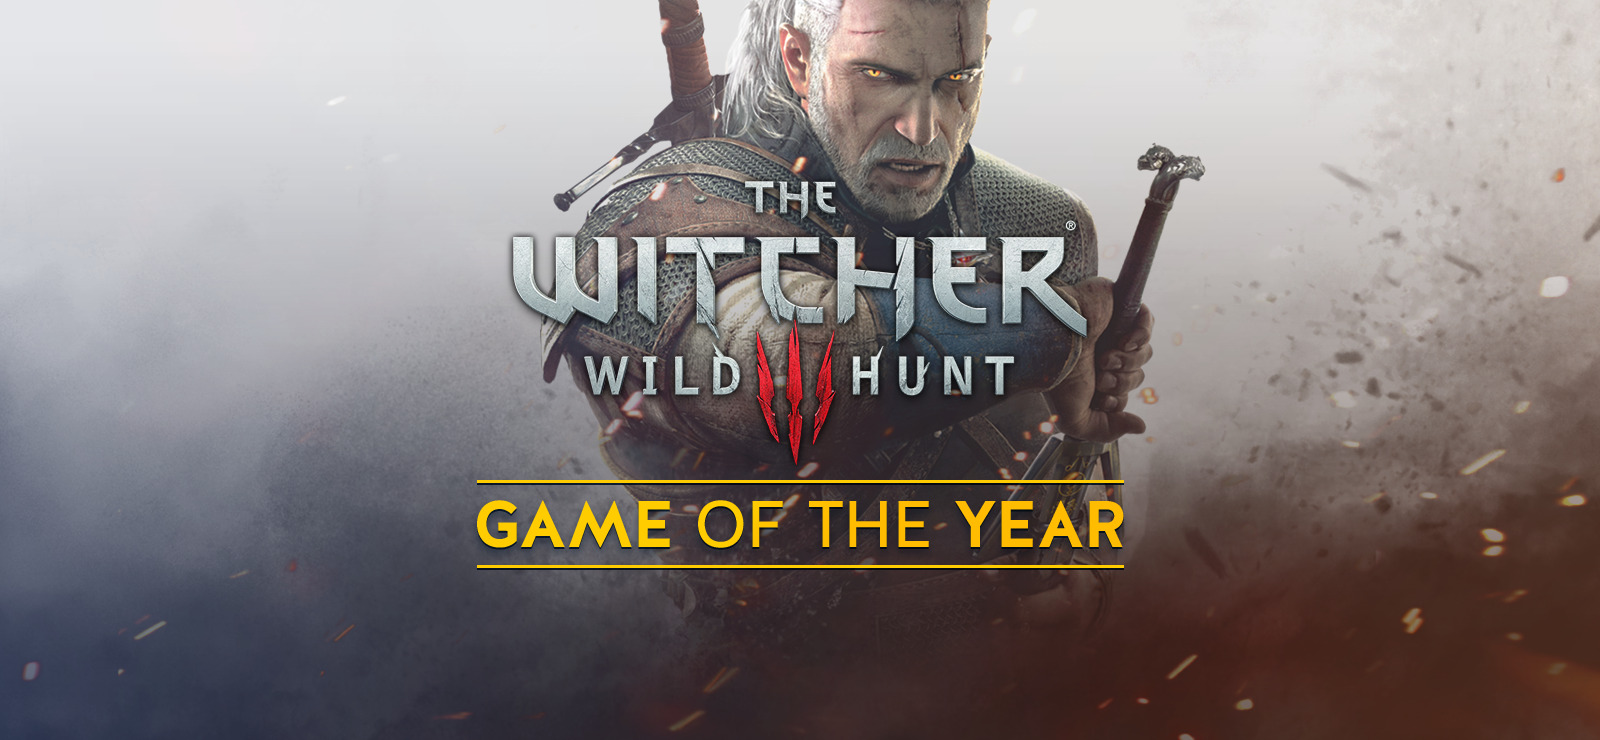 the witcher 3: wild hunt download